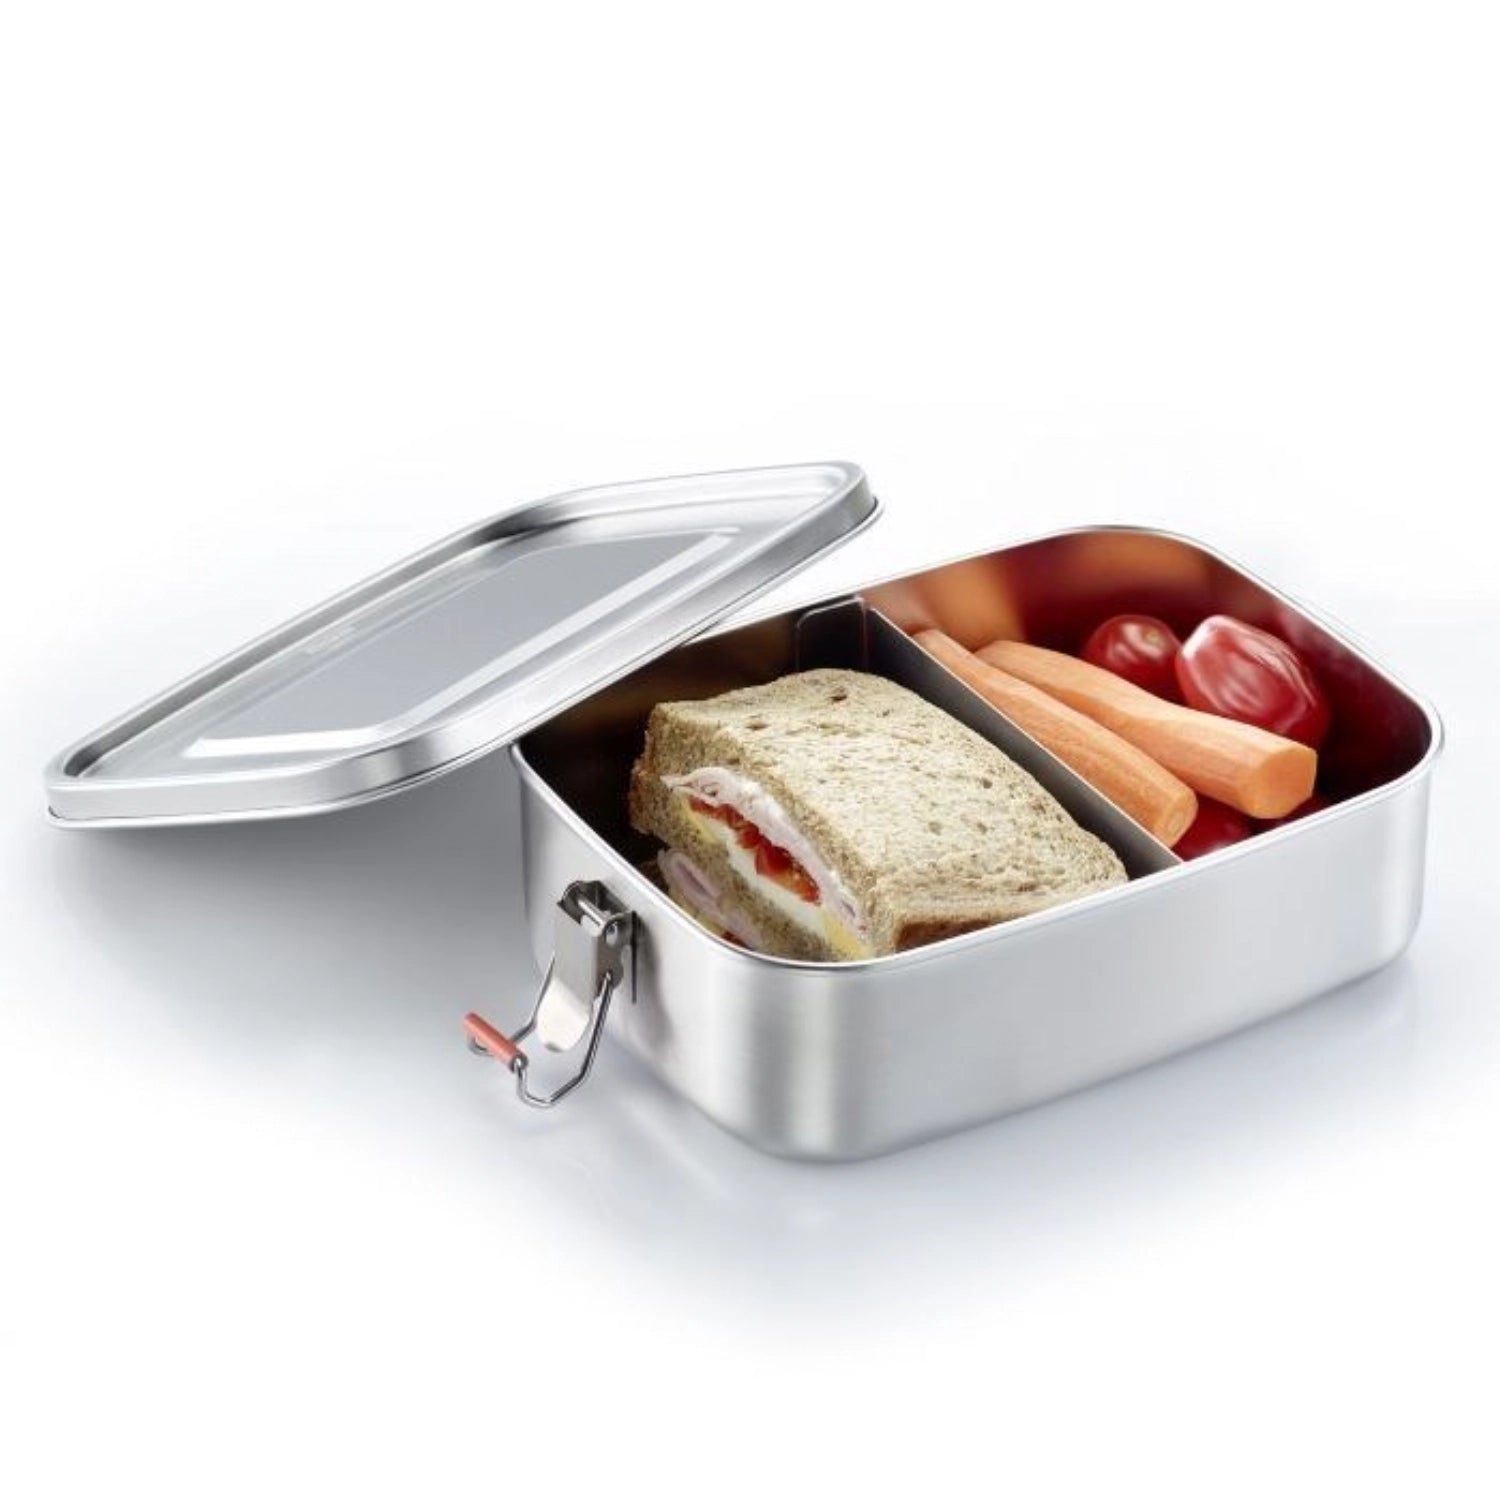 Lunchbox Viva Maxi, 1500ml - KAQTU Design